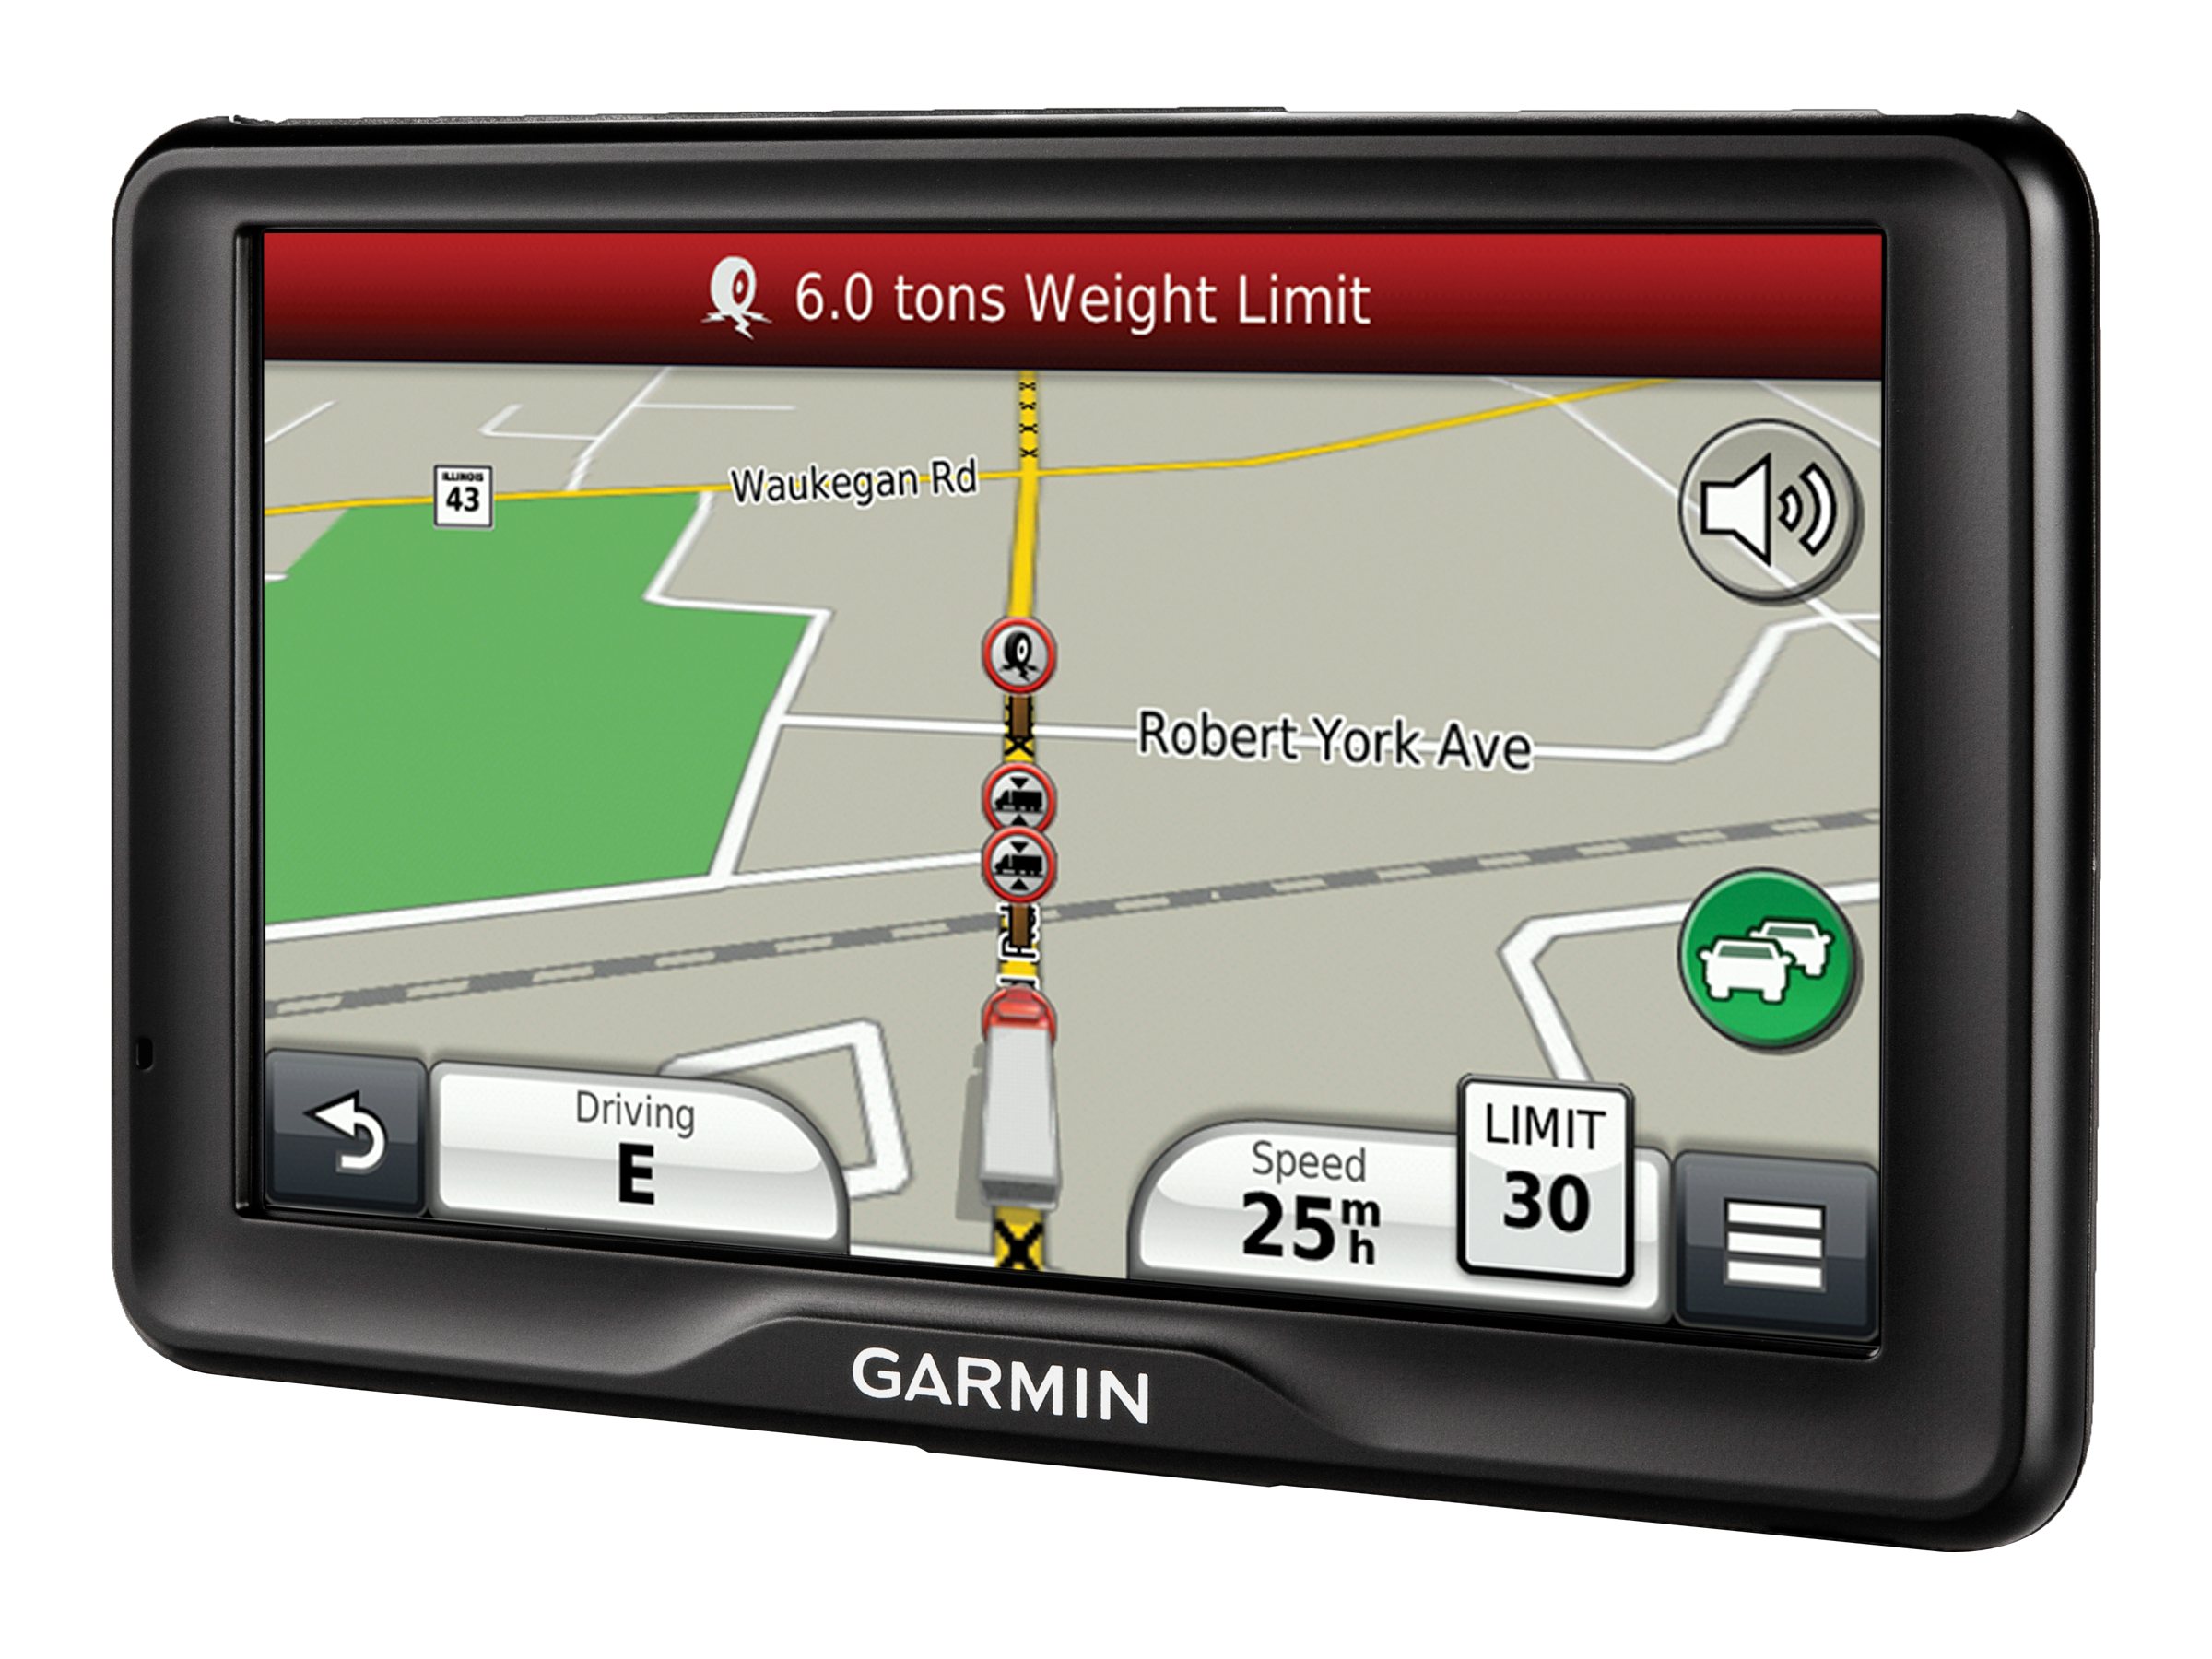 Garmin Navigator in gps tracking